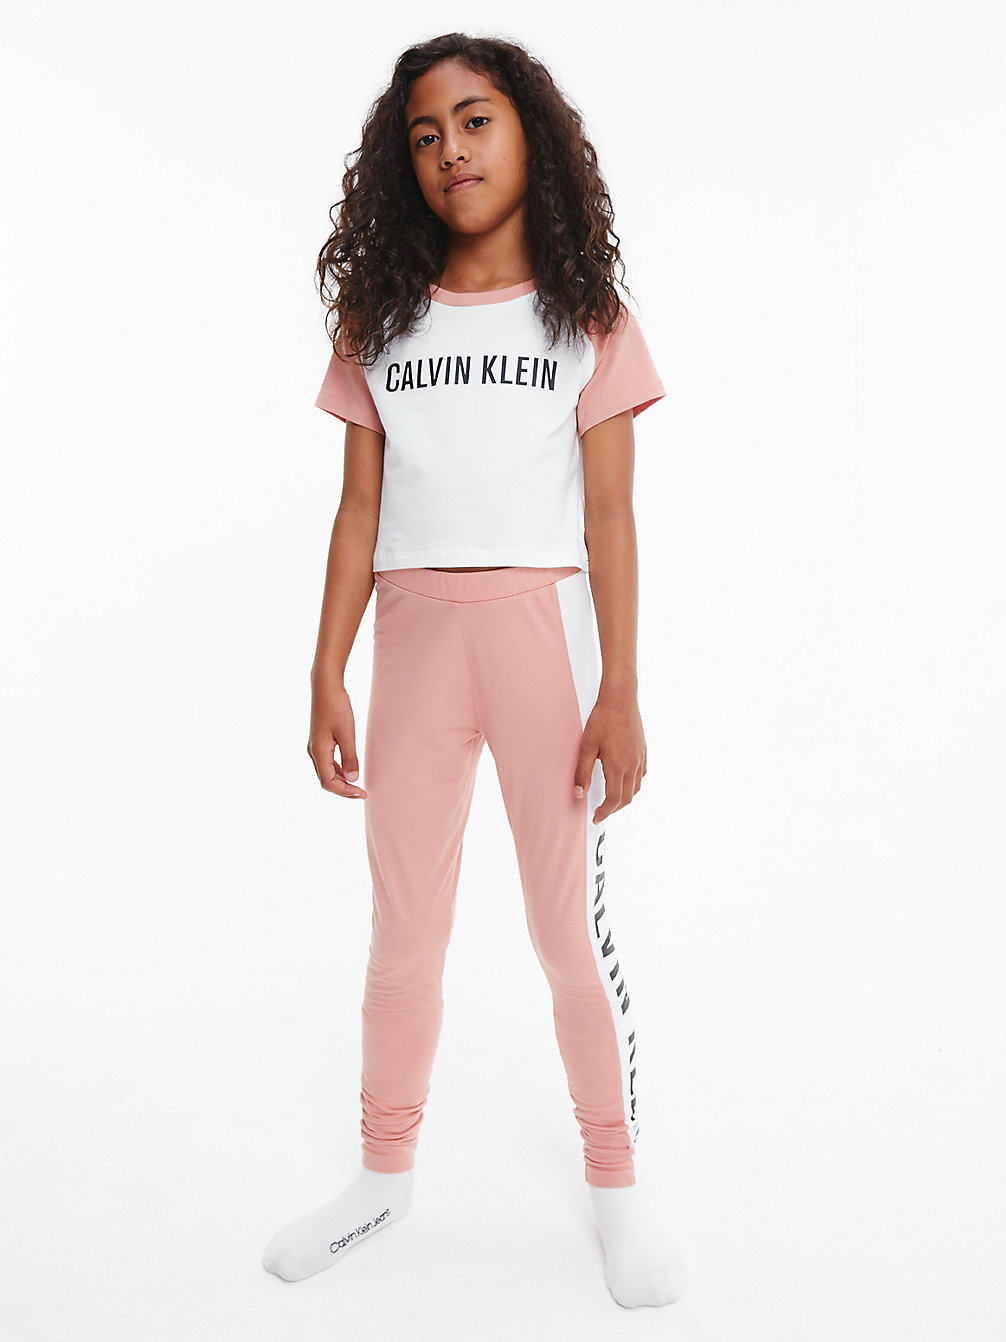 PINKMOCHA/W/PVHWHITE Pyjamaset - Intense Power undefined meisjes Calvin Klein